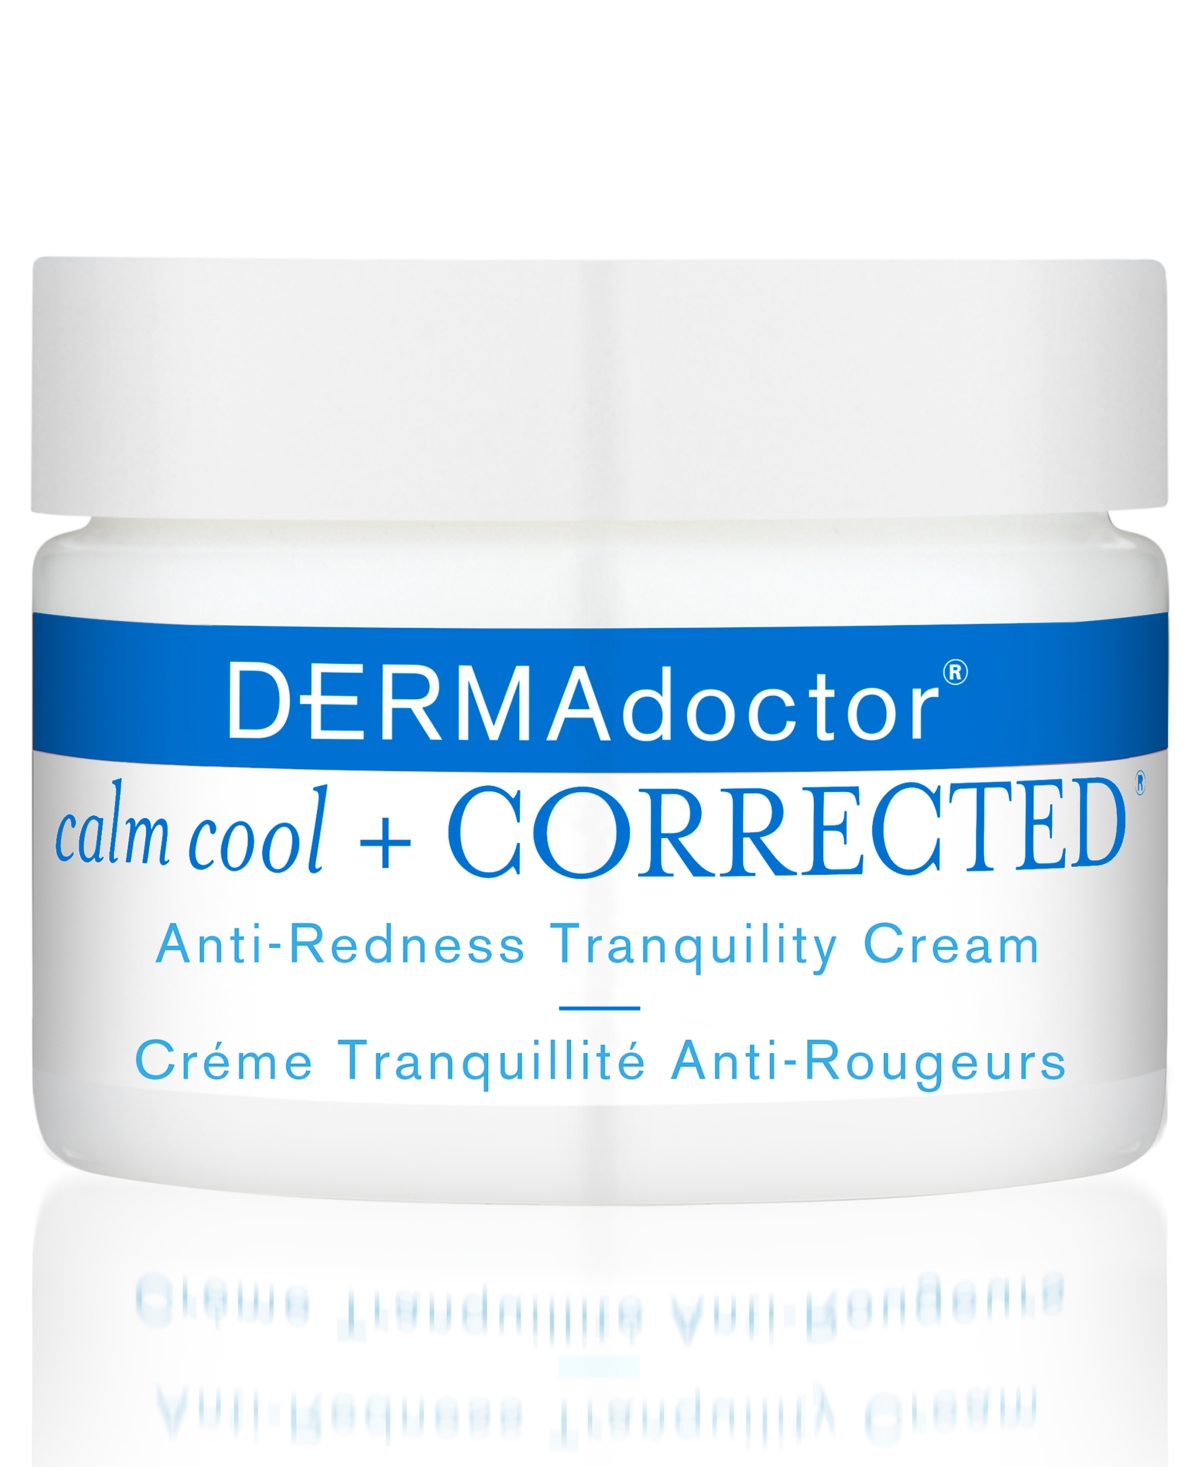 Calm Cool + Corrected Anti-Redness Tranquility Cream, 1.7 oz.